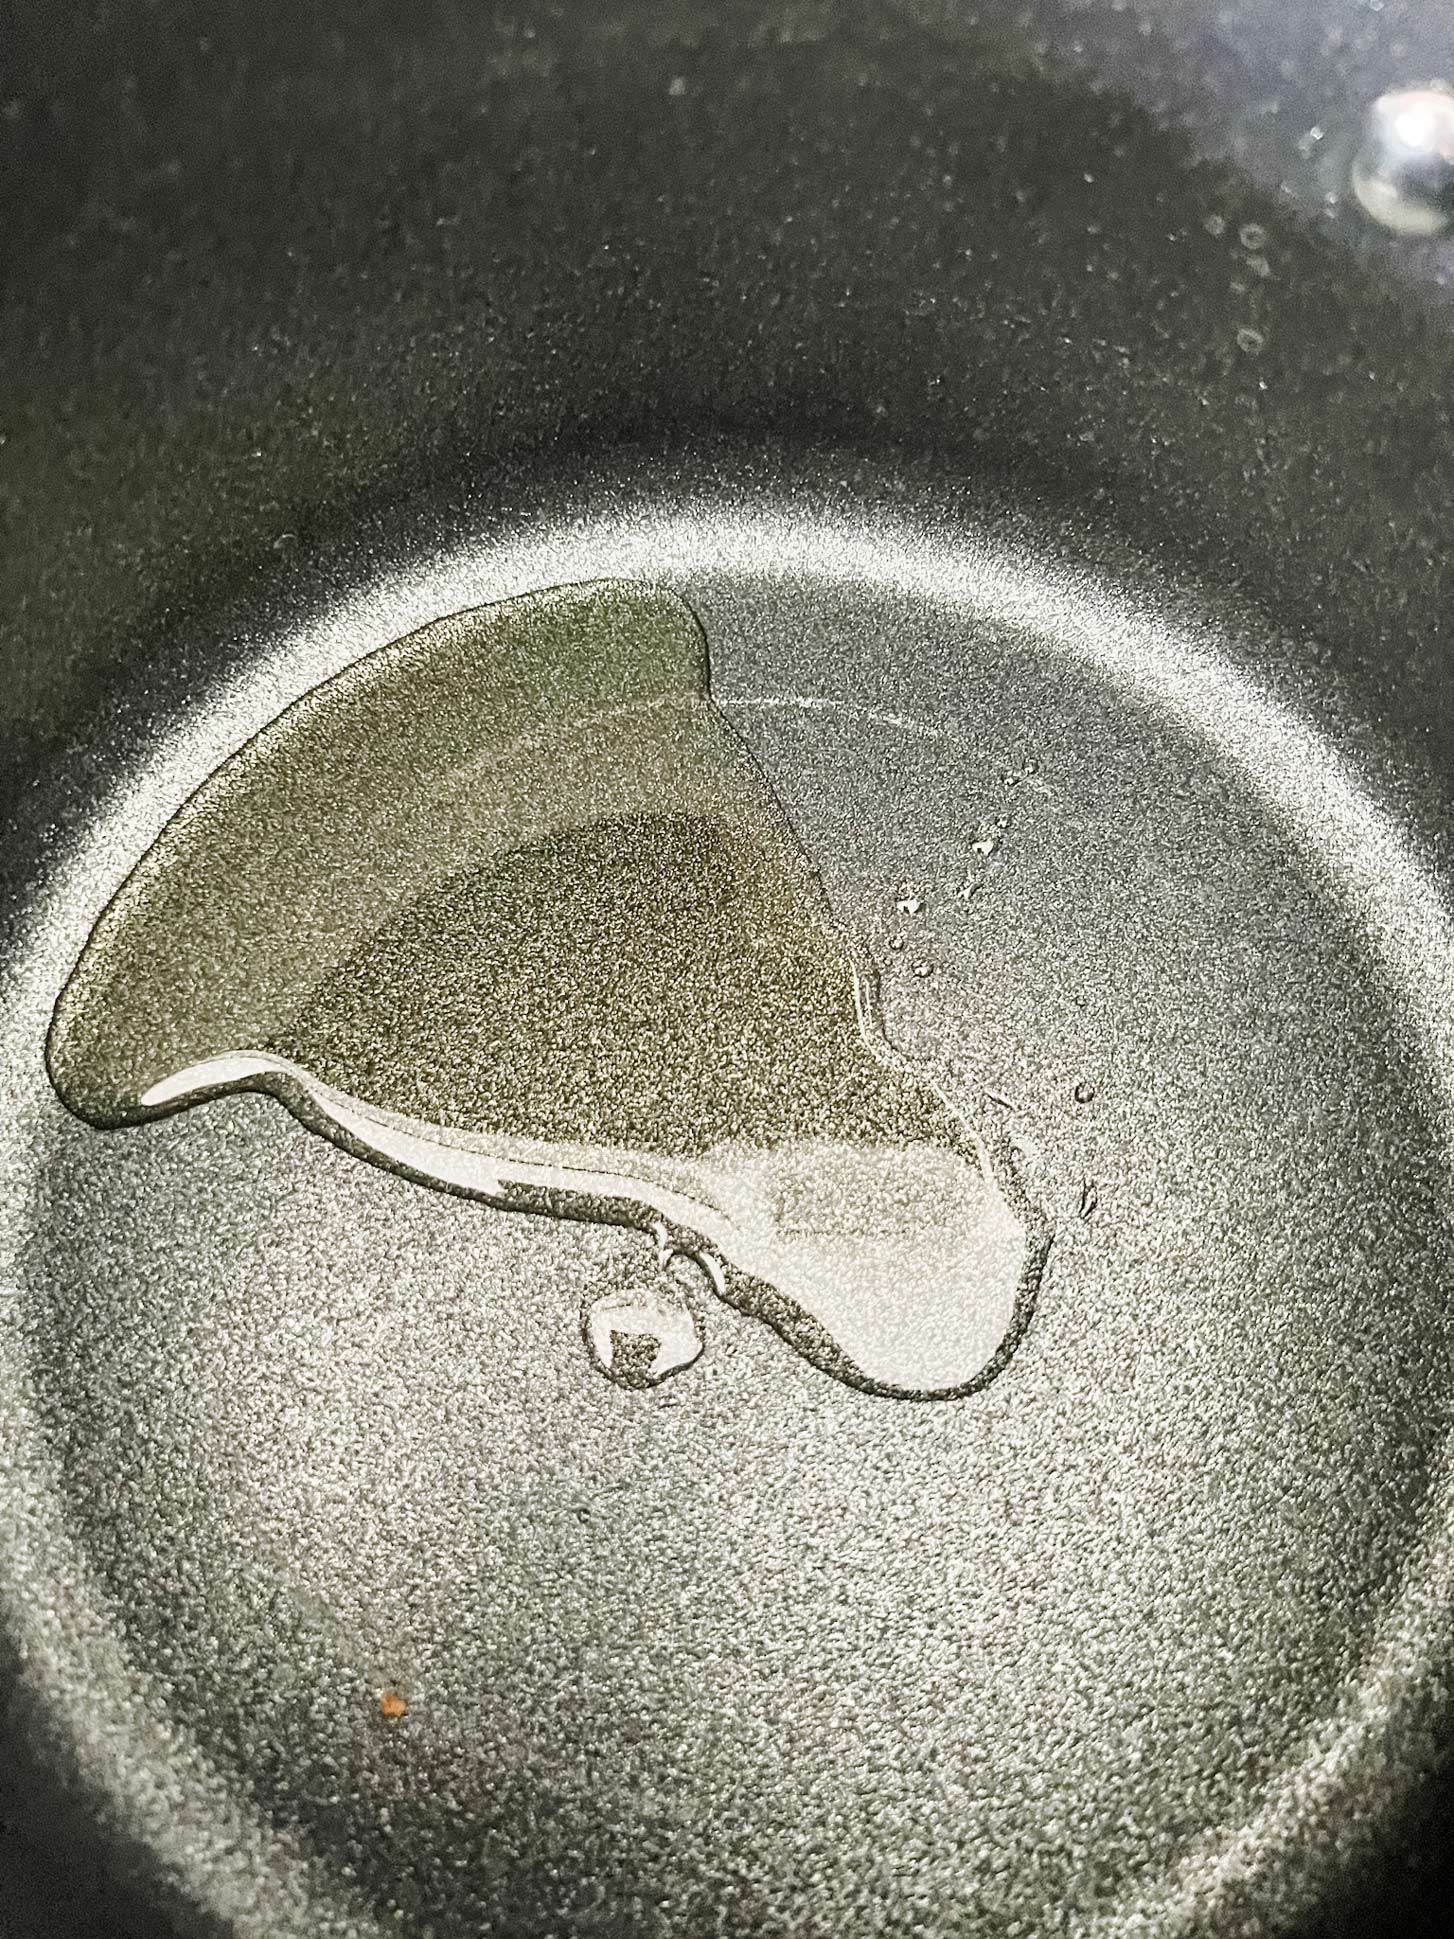 Oil heating in a saucepan.